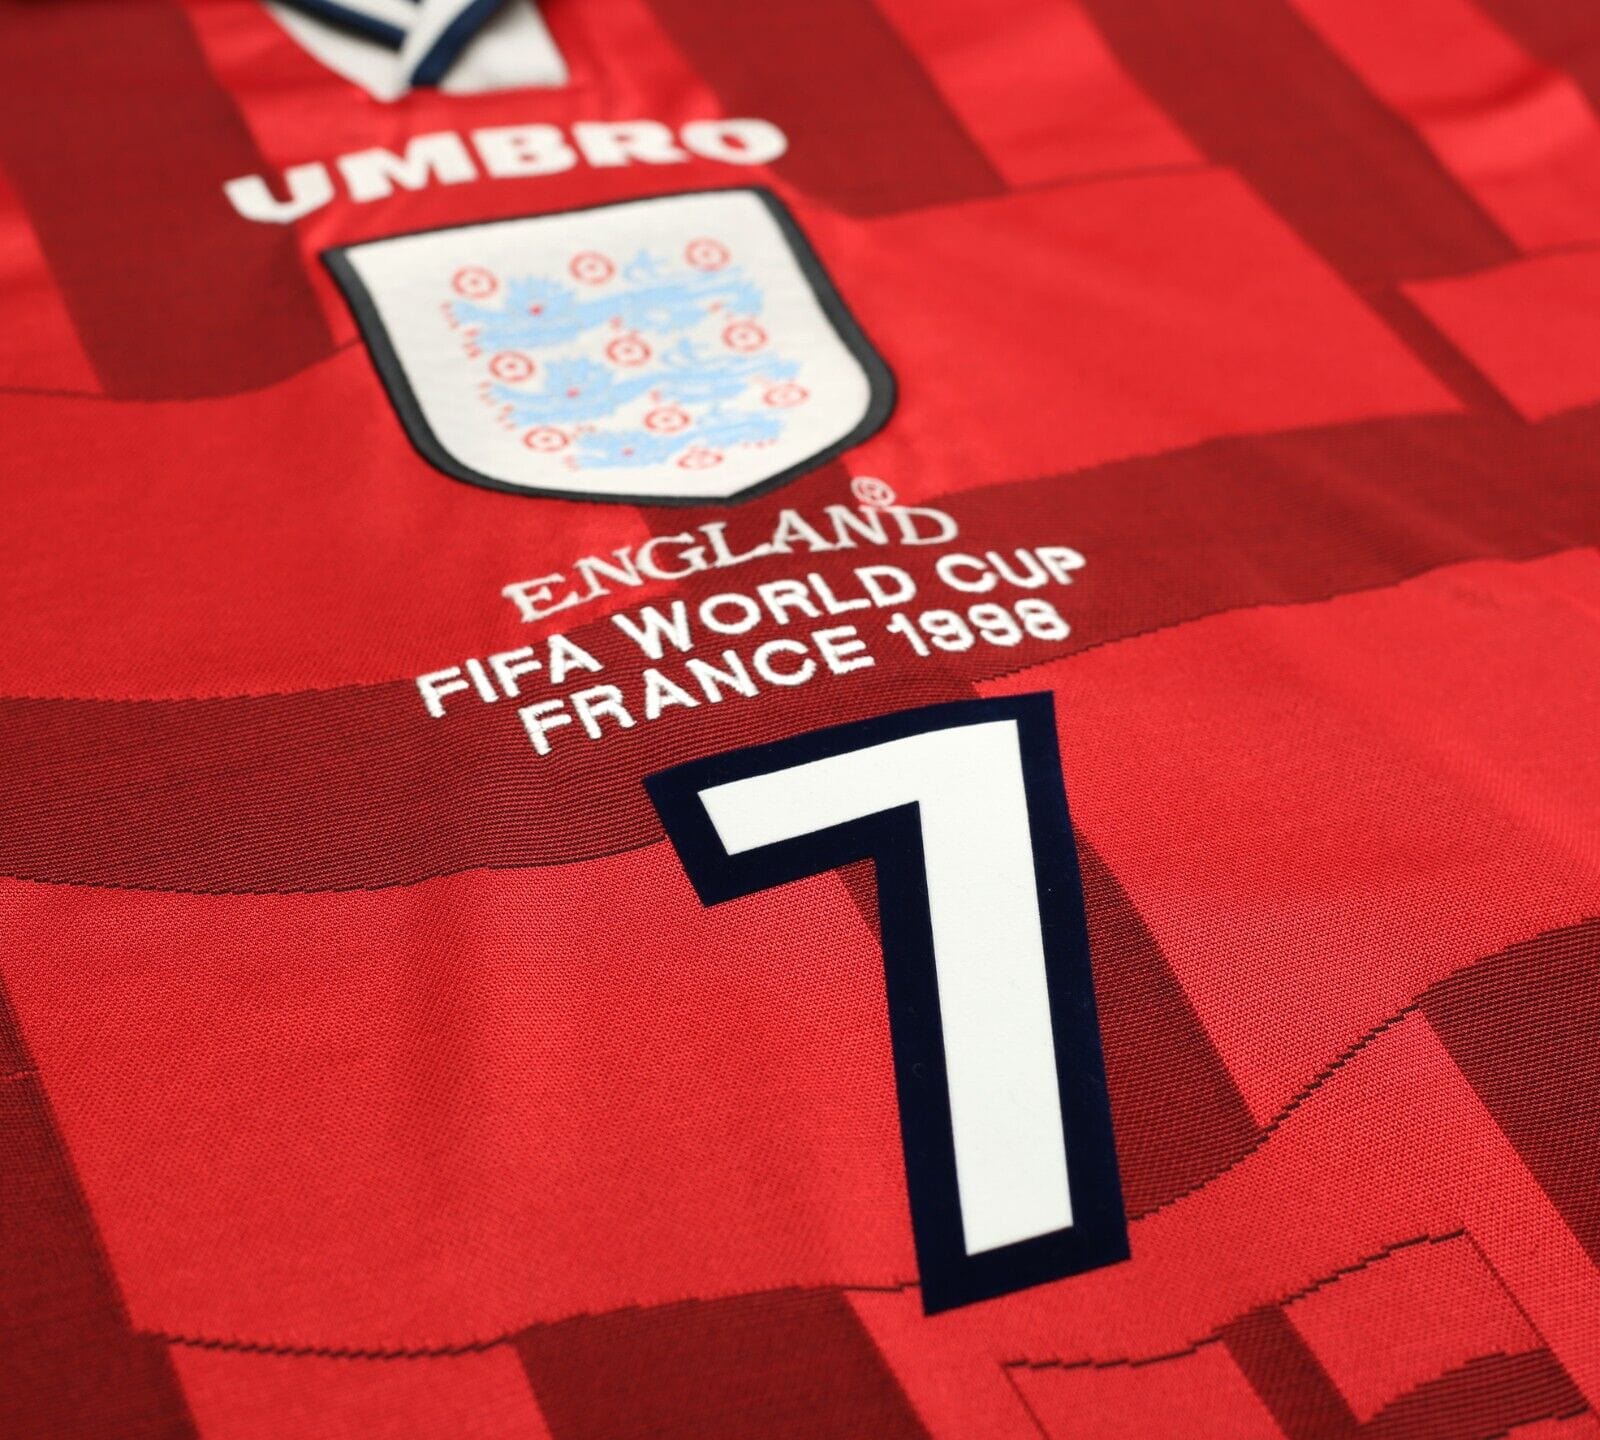 1997/99 BECKHAM #7 England Vintage Umbro Away Football Shirt (XL) World Cup 98